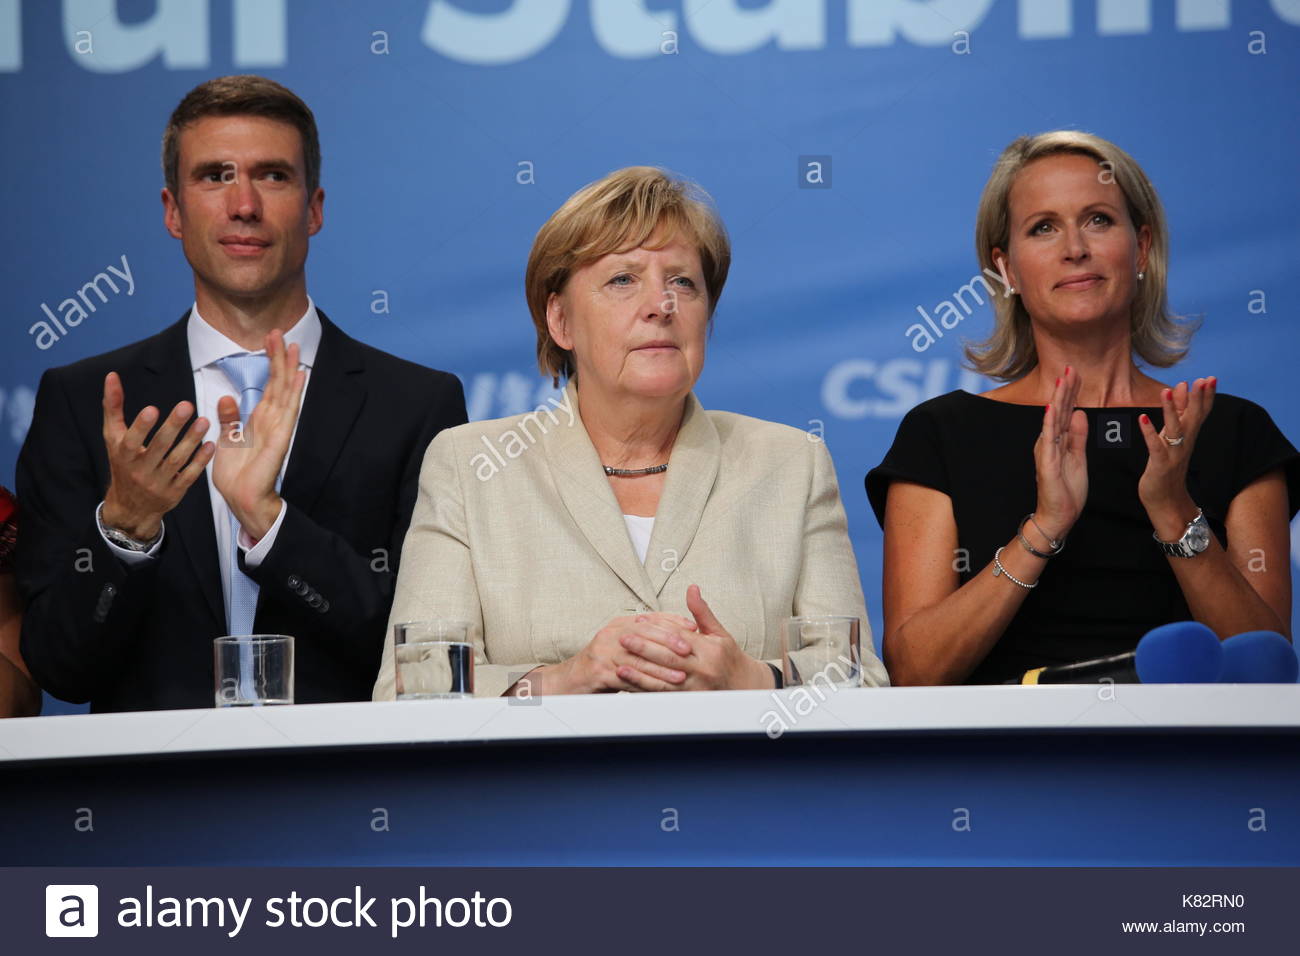 Angela Merkel prende parte a una discussione durante una campagna elettorale evento in Baviera, Germania Foto Stock